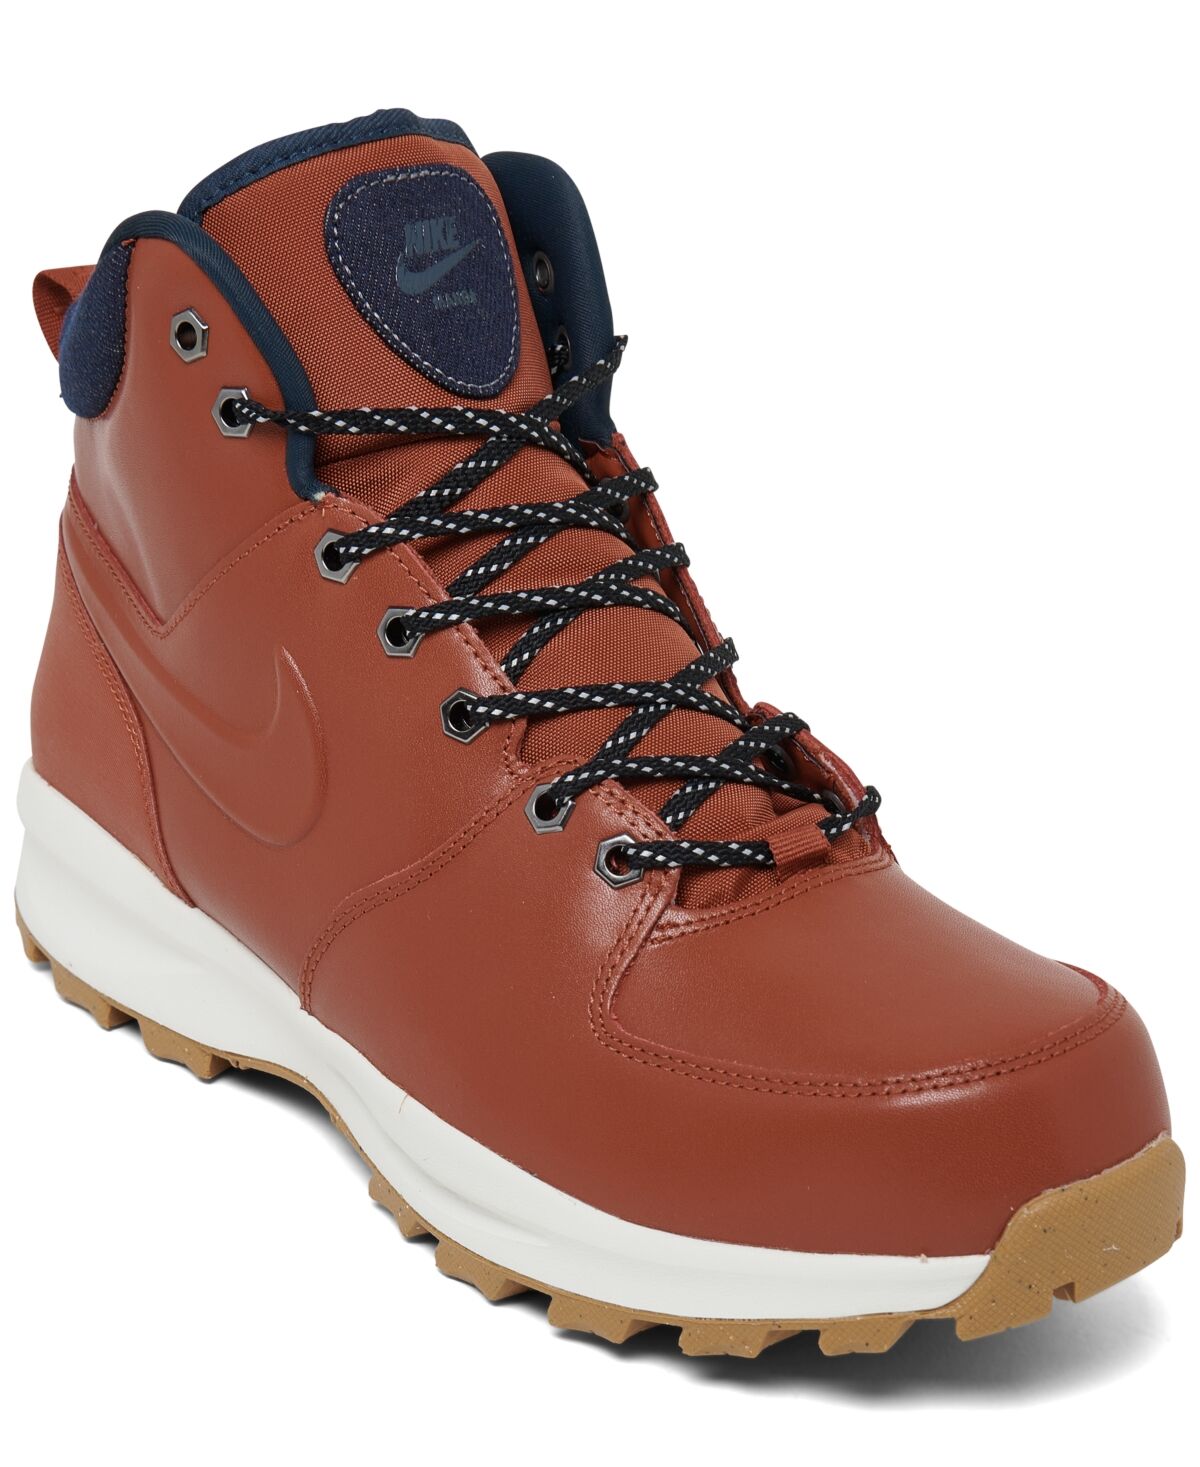 Nike Men's Manoa Leather Se Boots from Finish Line - Rugged Orange, Armory